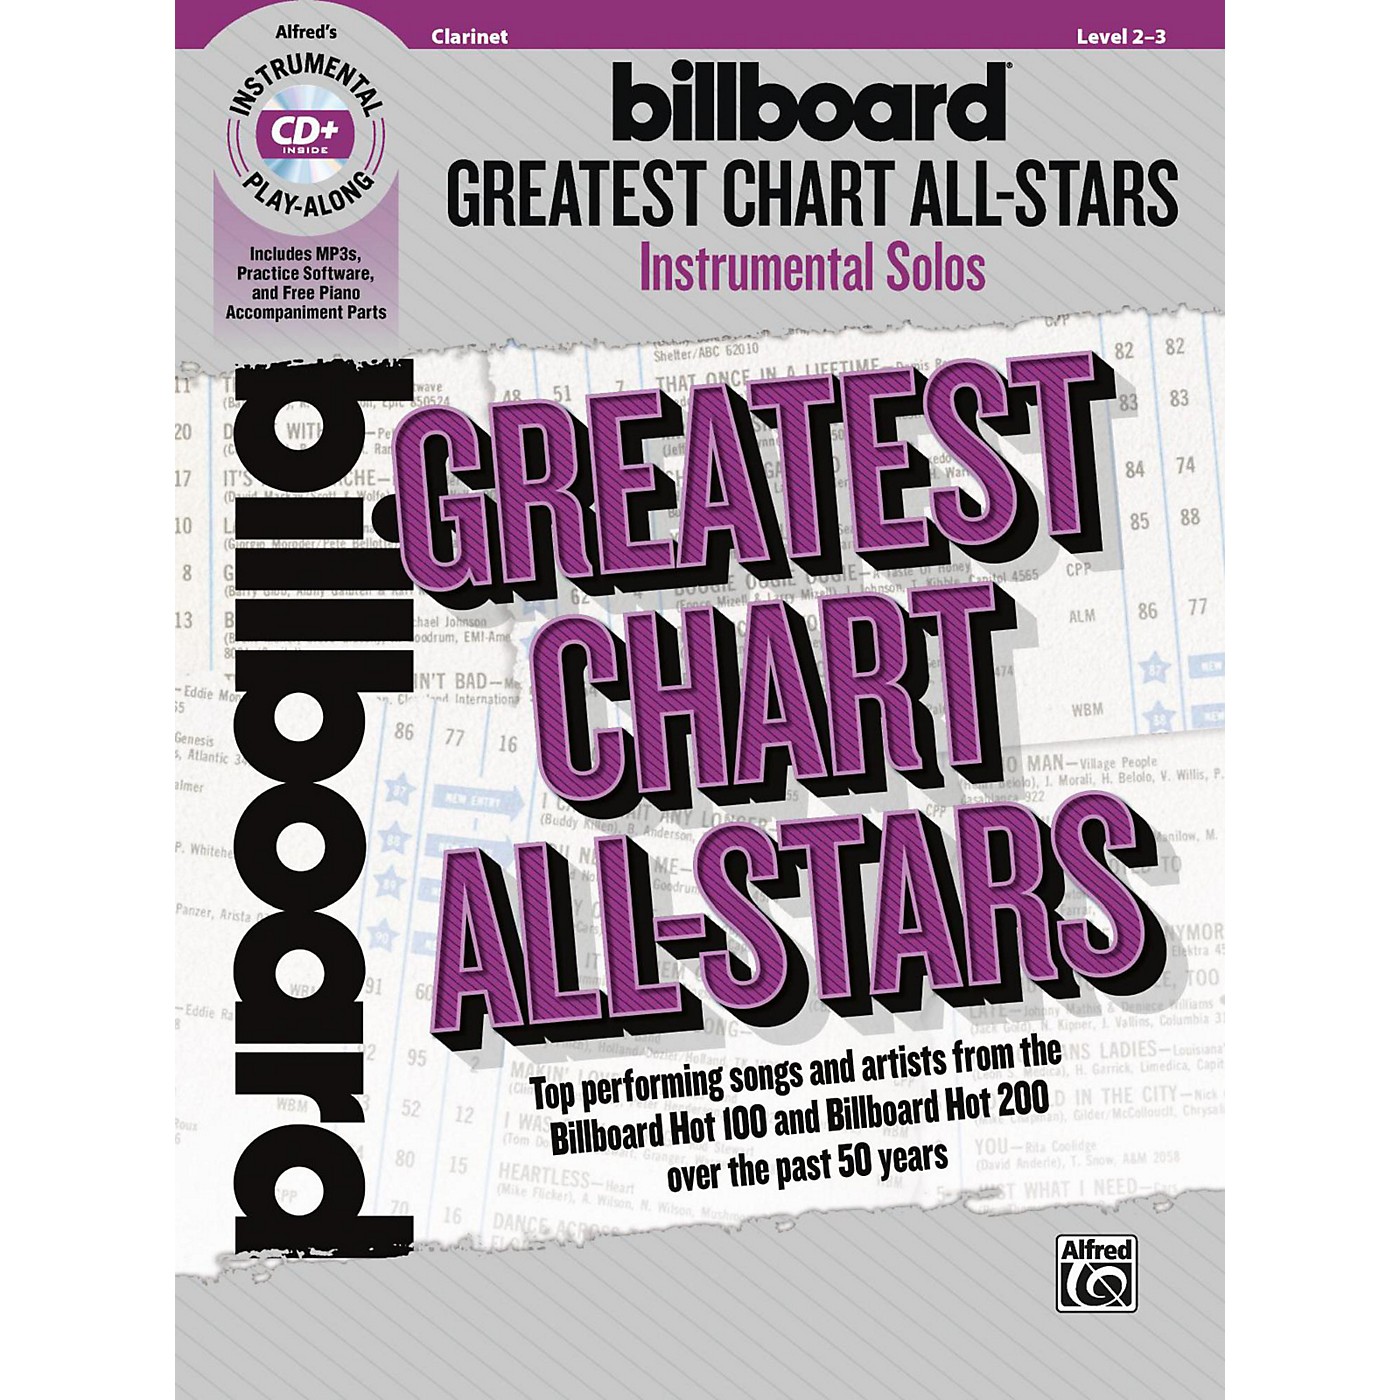 Alfred Billboard Greatest Chart All-Stars Instrumental Solos Clarinet Book & CD Level 2-3 thumbnail